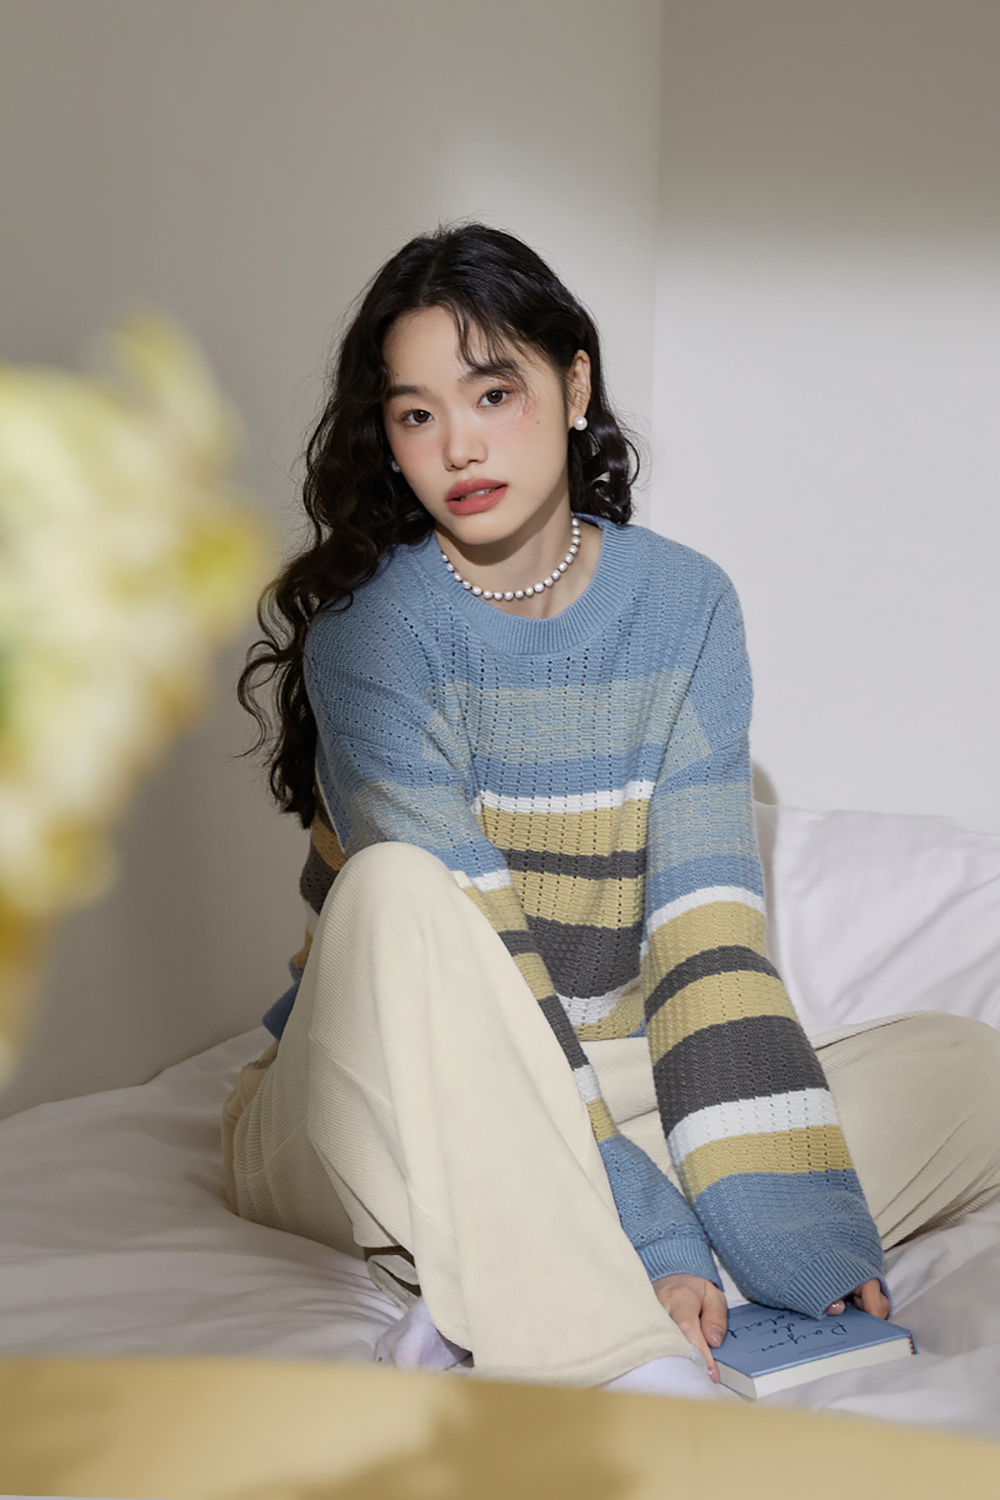 Lightweight knitted sweater